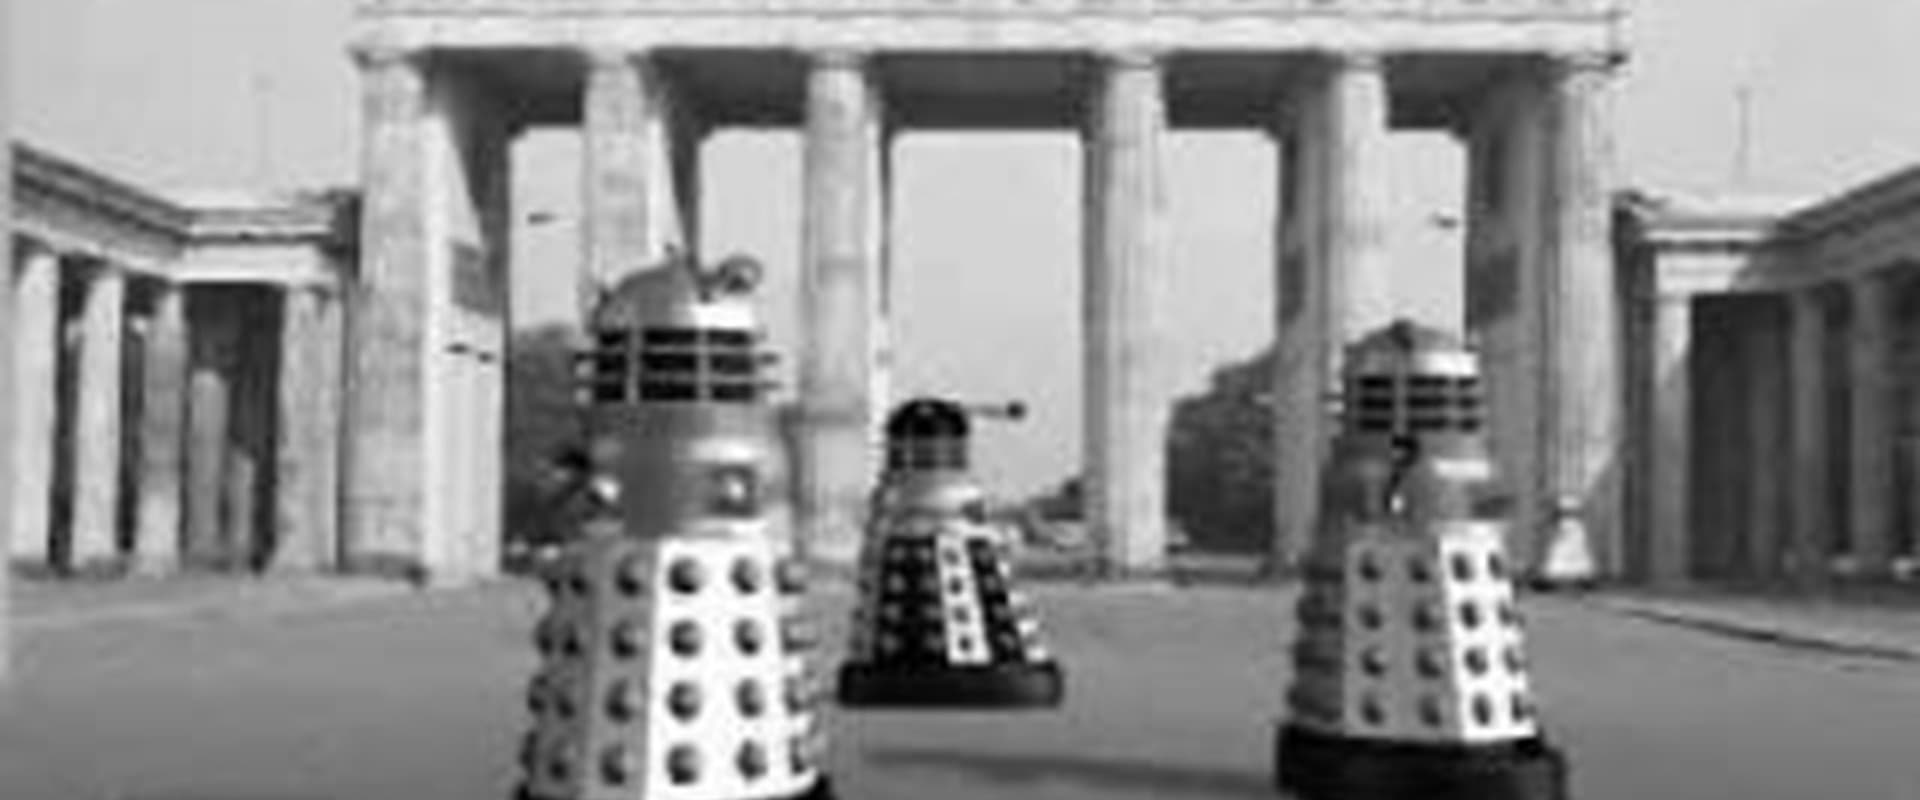 Dalek Invasion - The Fall of Earth